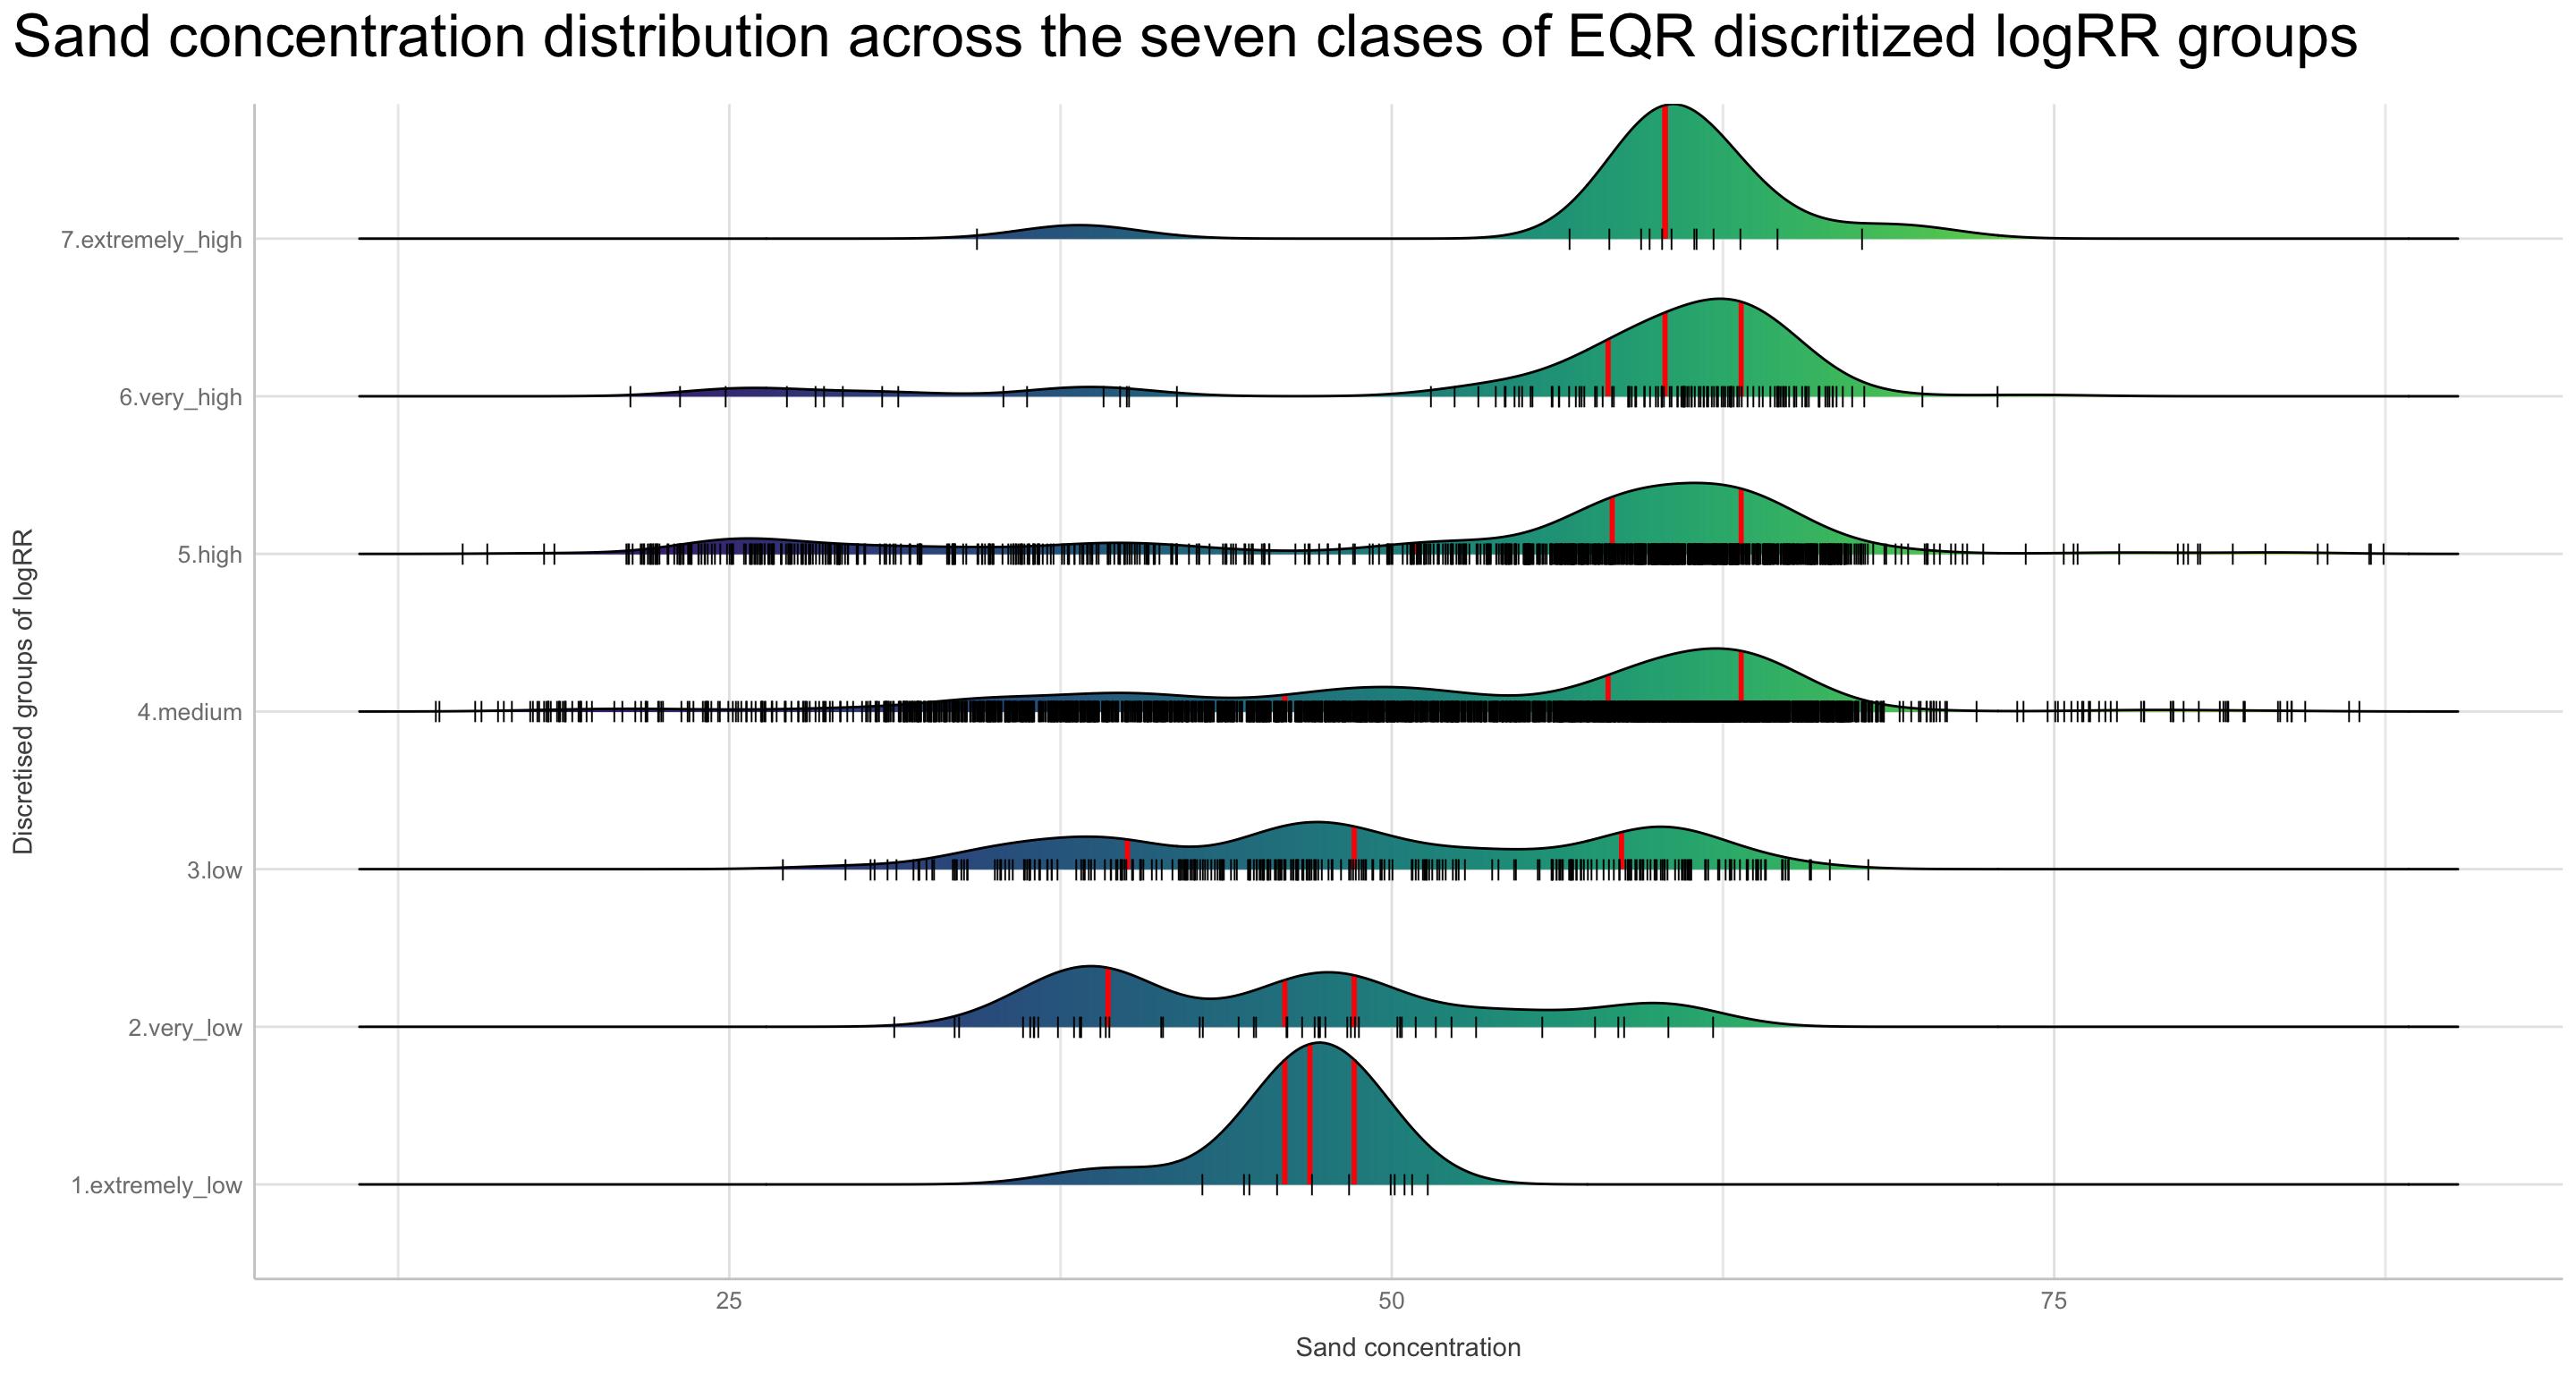 Density ridge plot for sand content distribution across the EQR discritized logRR groupss